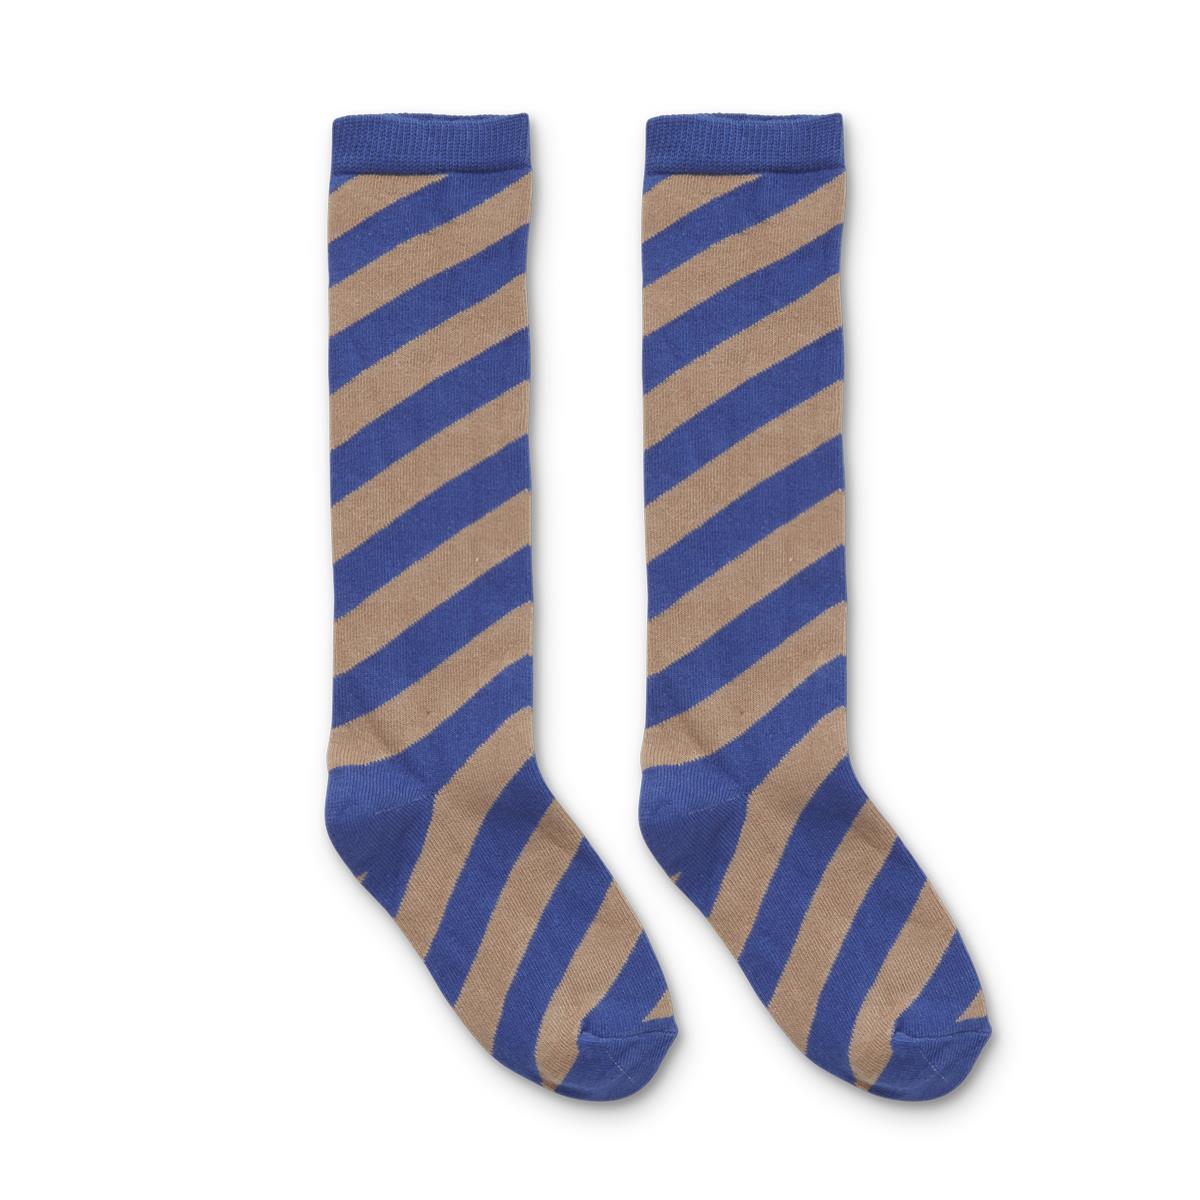 SPROET & SPROUT - SOCKS diagonal stripe ultra blue